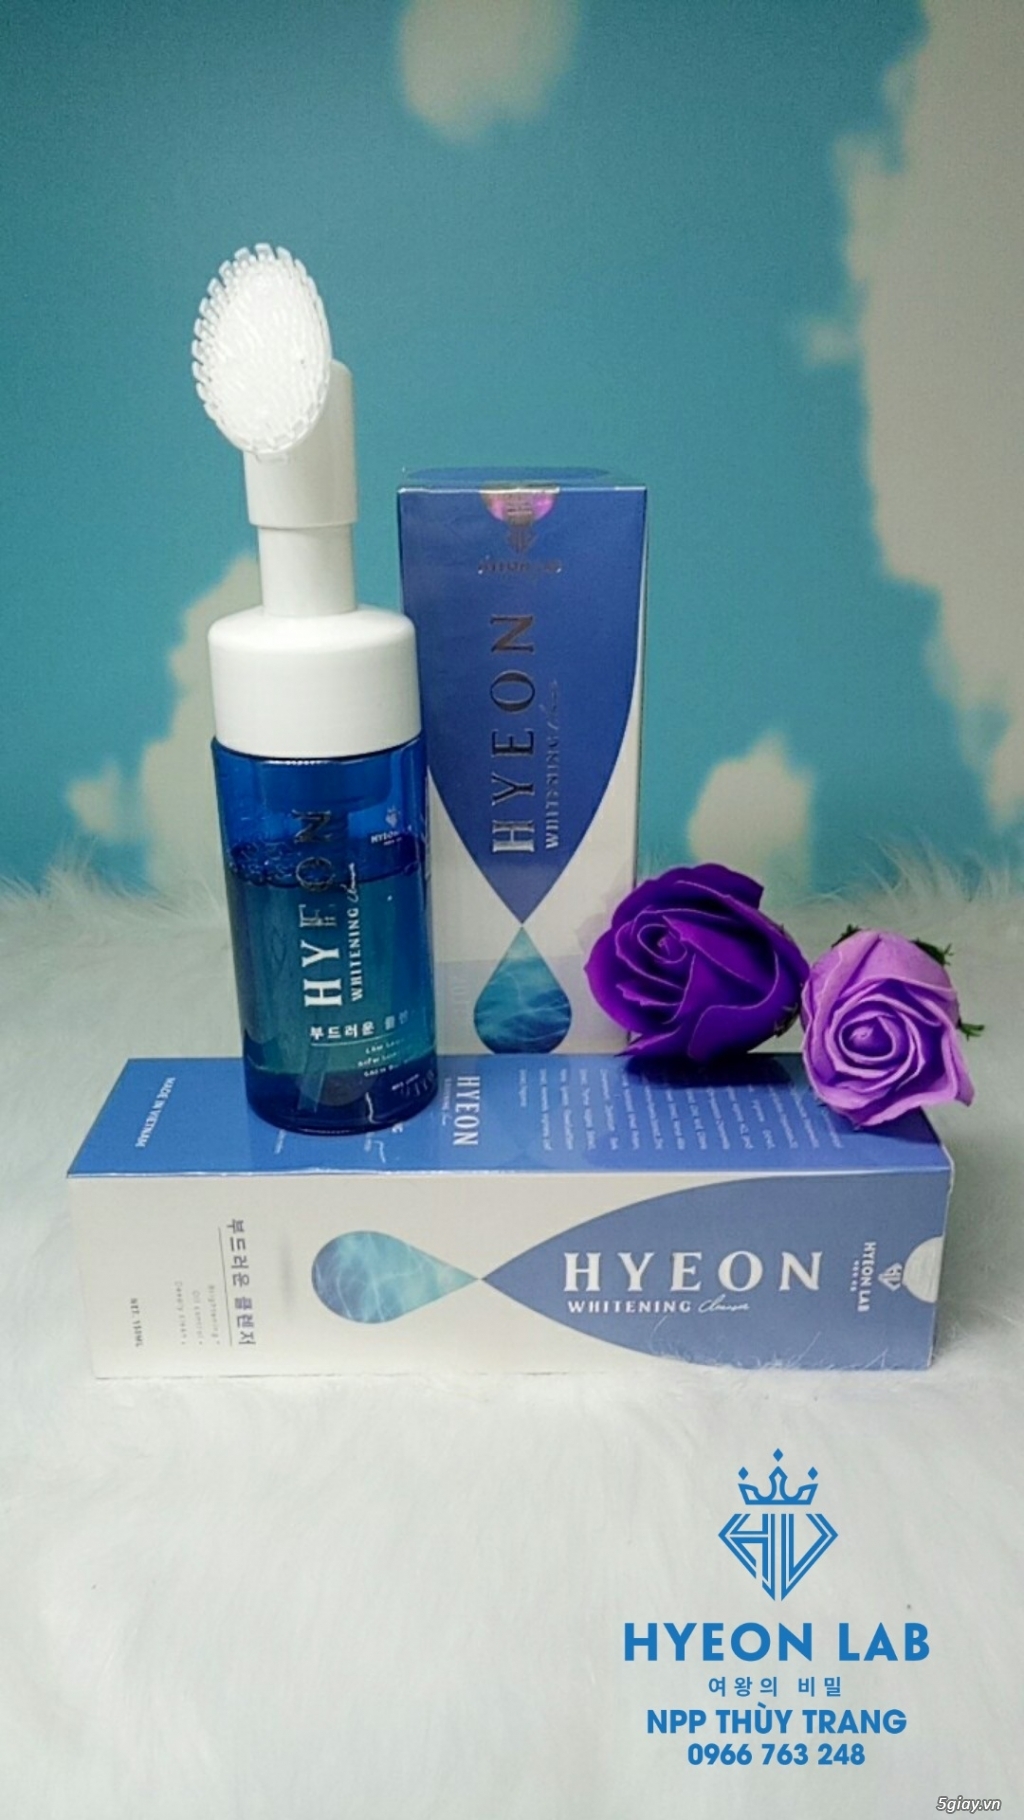 Sữa rửa mặt đầu cọ Hyeon lab, mỹ phẩm cao cấp Hyeon lab.